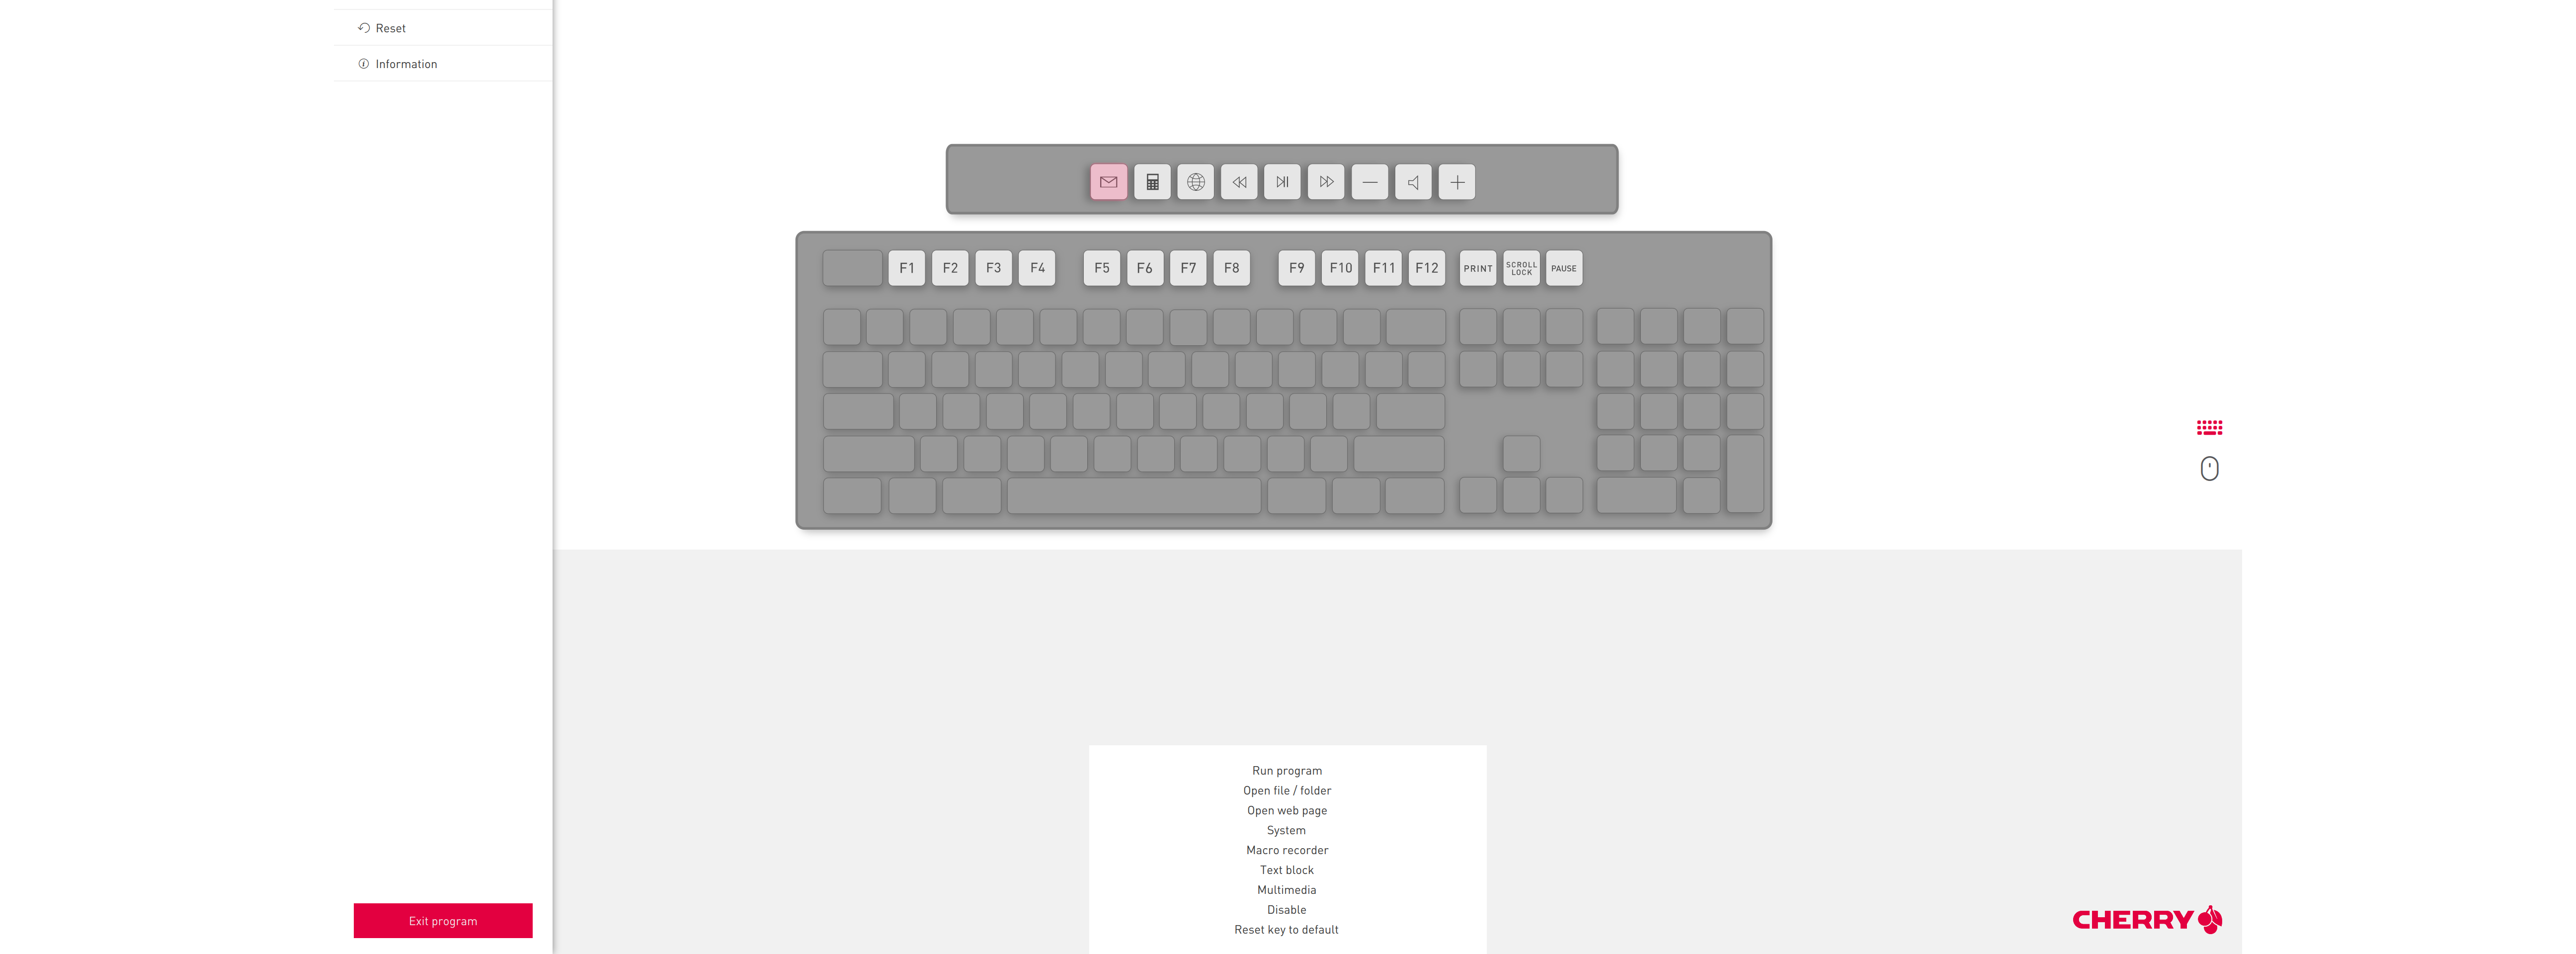 cherry stream desktop keys key customizer